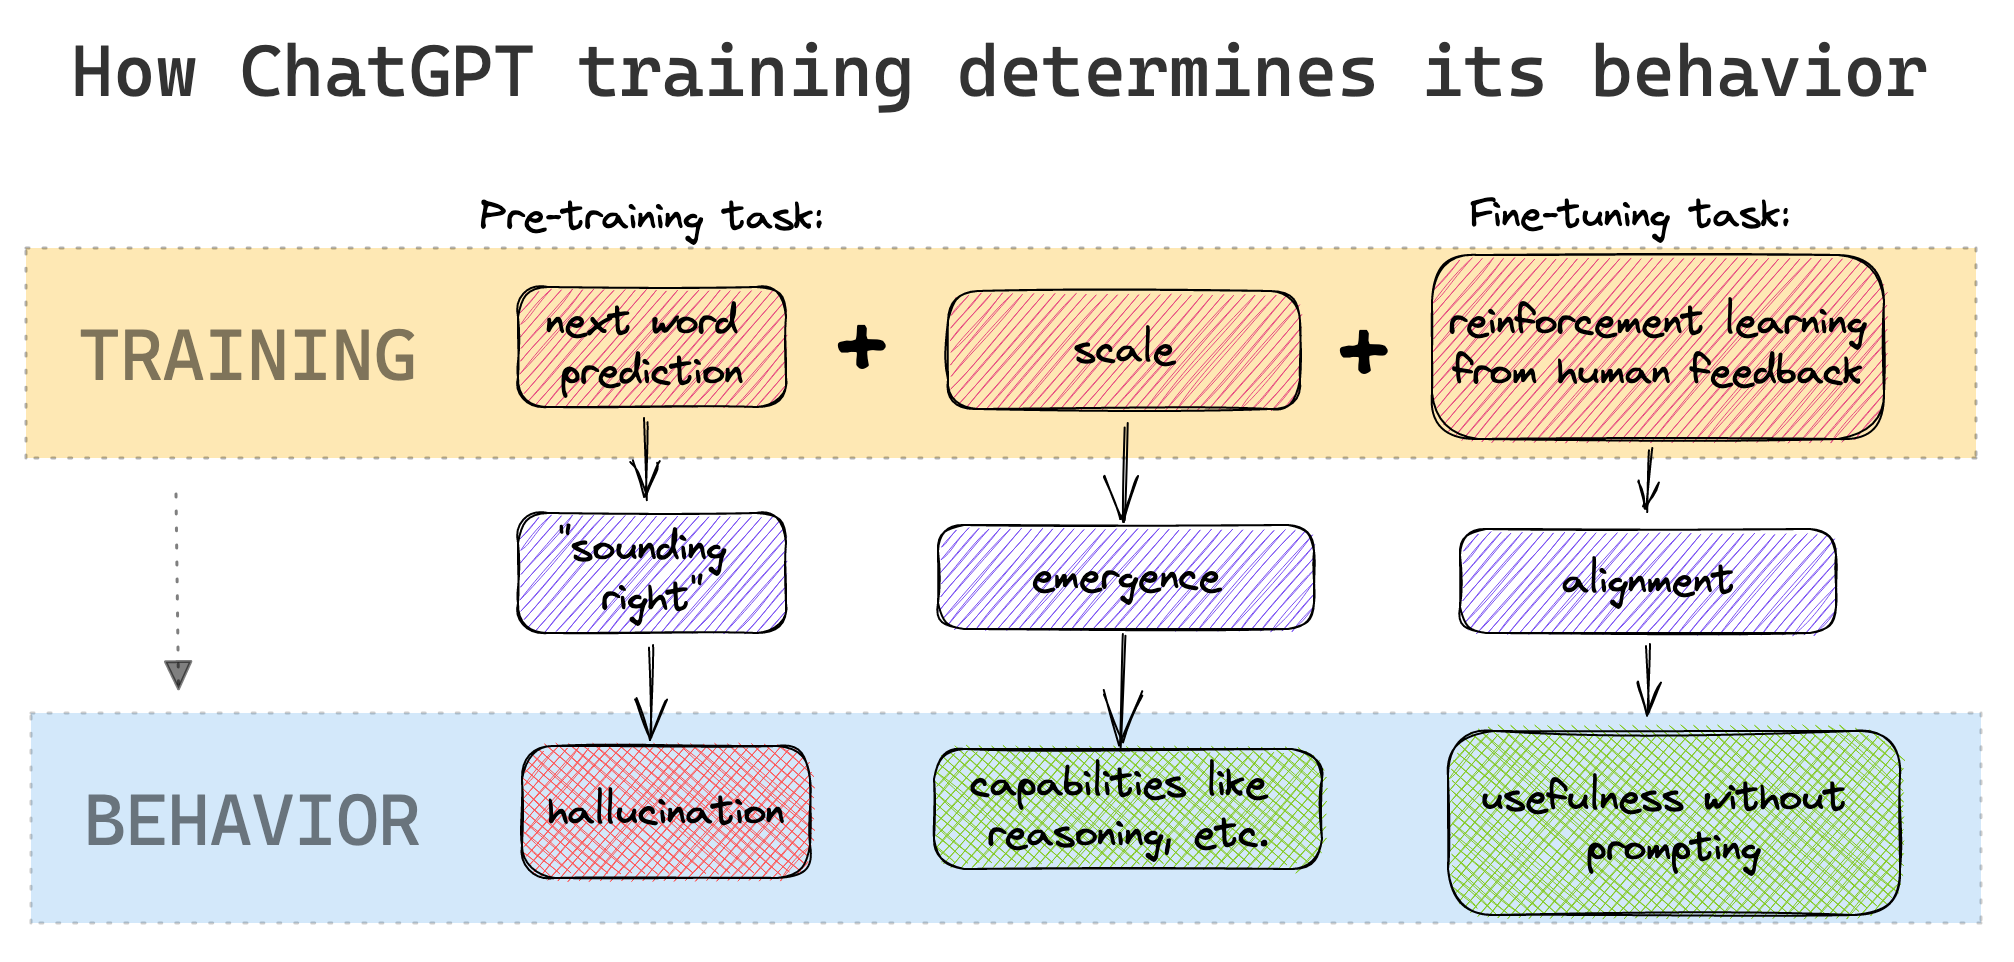 How ChatGPT's training determines its behavior